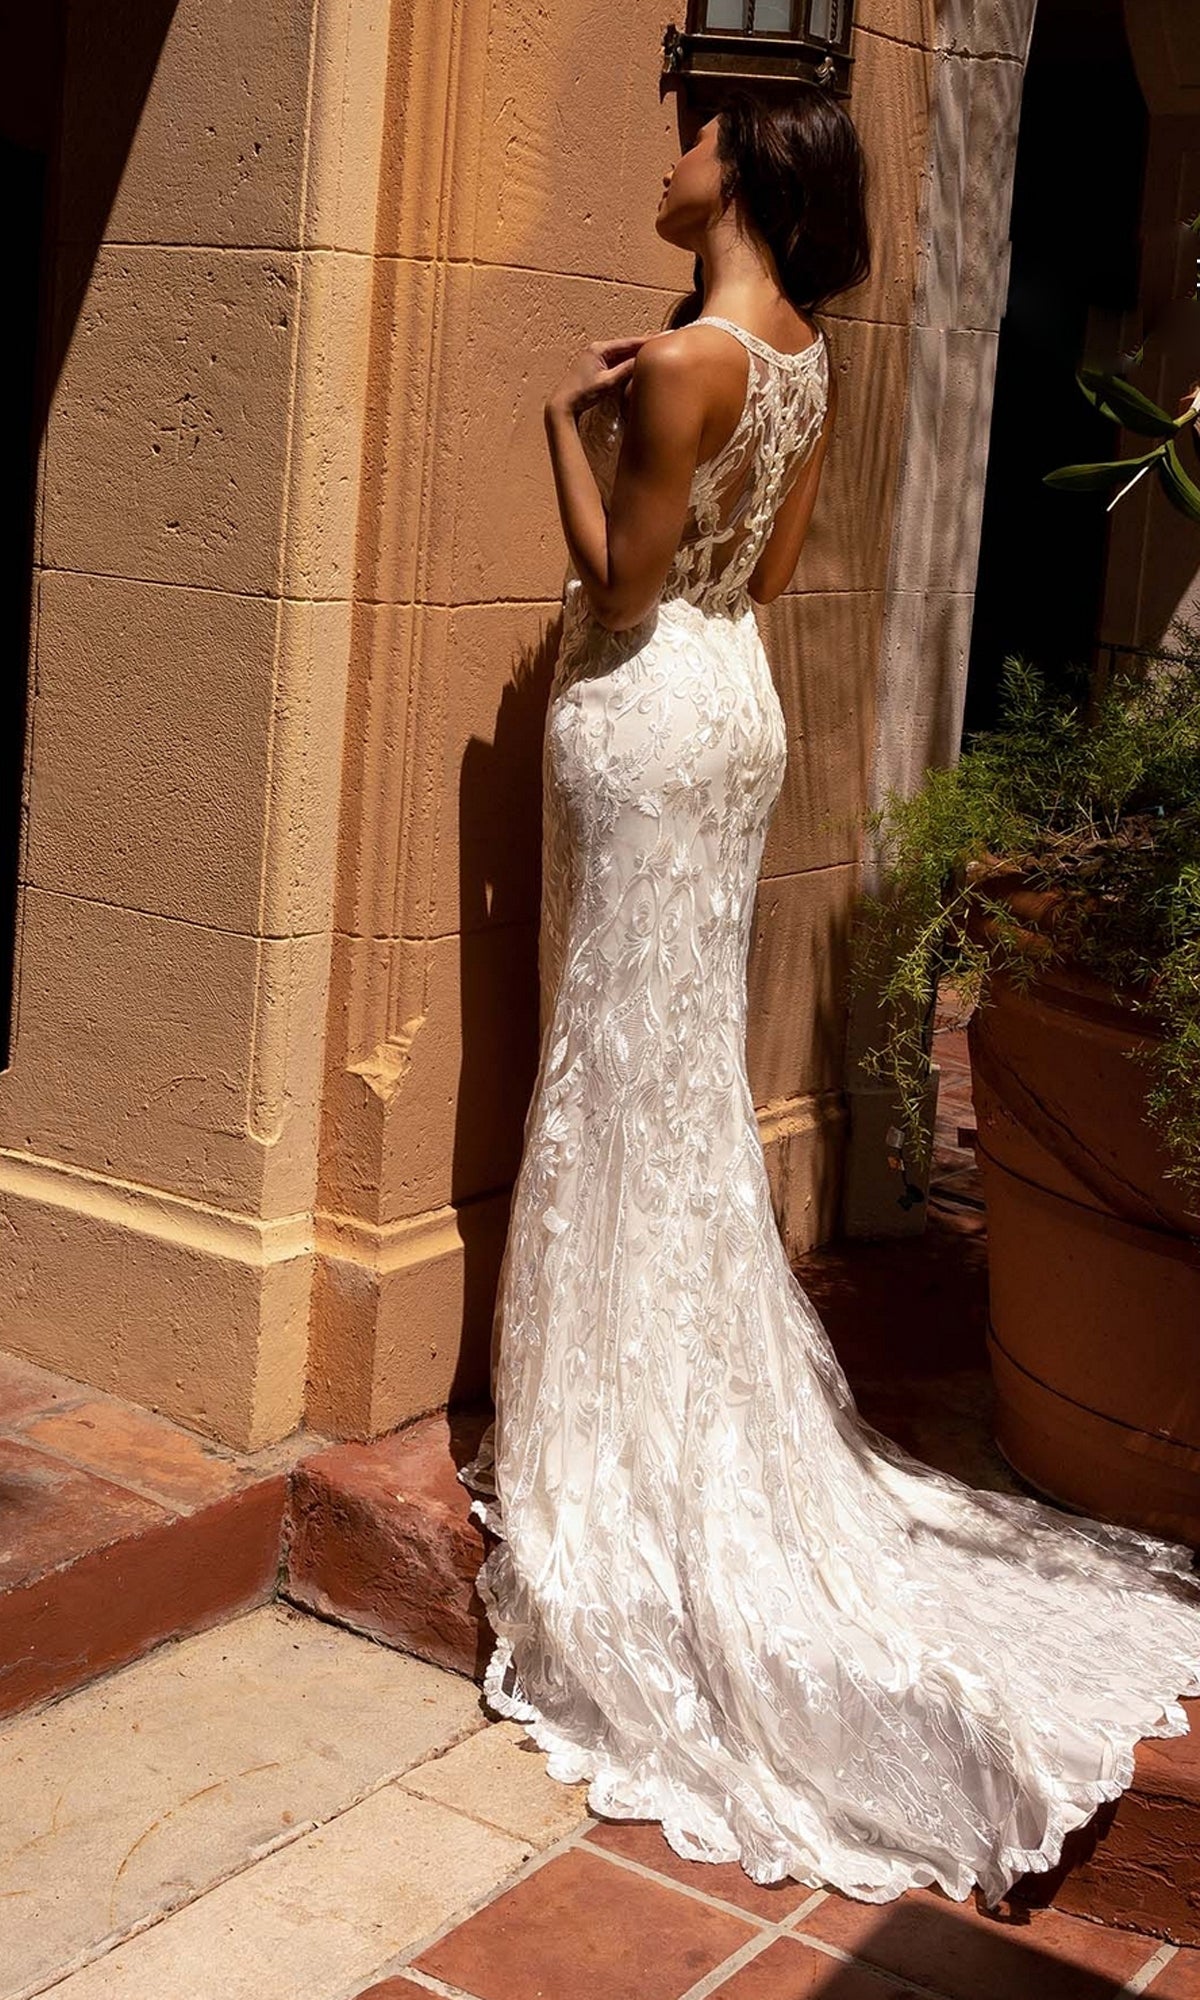 Long Wedding Dress 11132 by Primavera